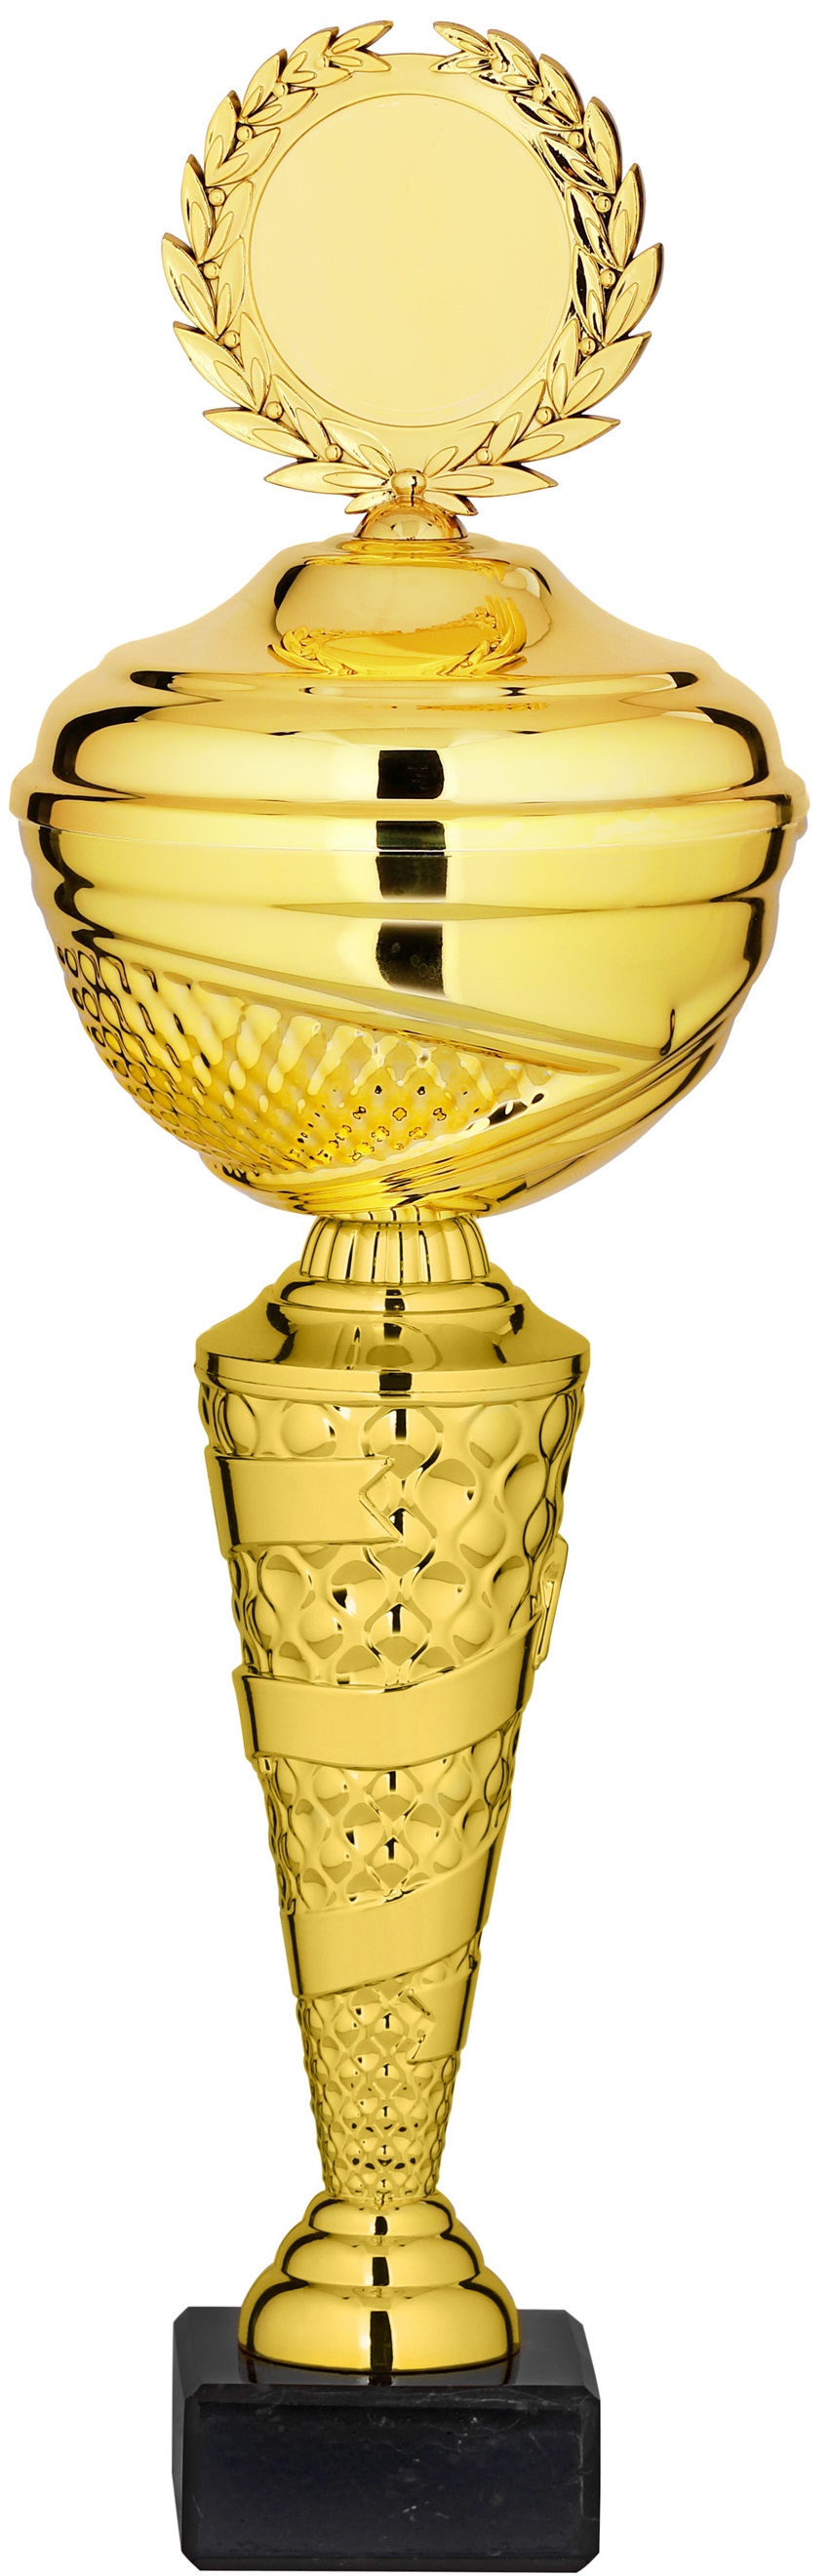 Pokal P600-Gold  inkl. Gravur und Emblem 41,5 cm